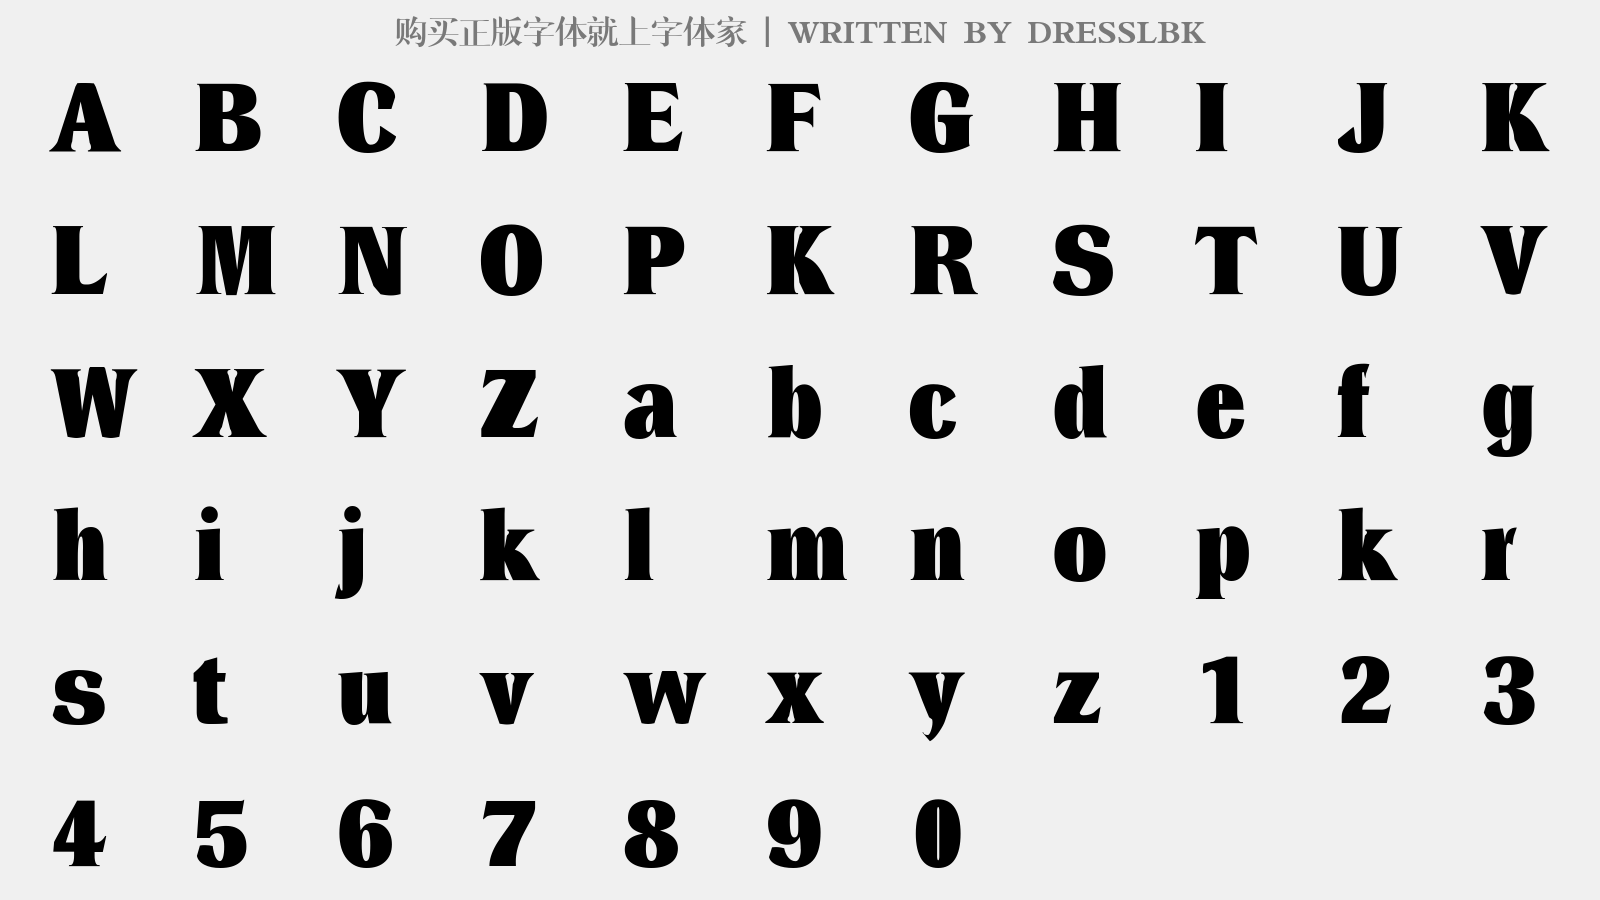 DRESSLBK - 大写字母/小写字母/数字